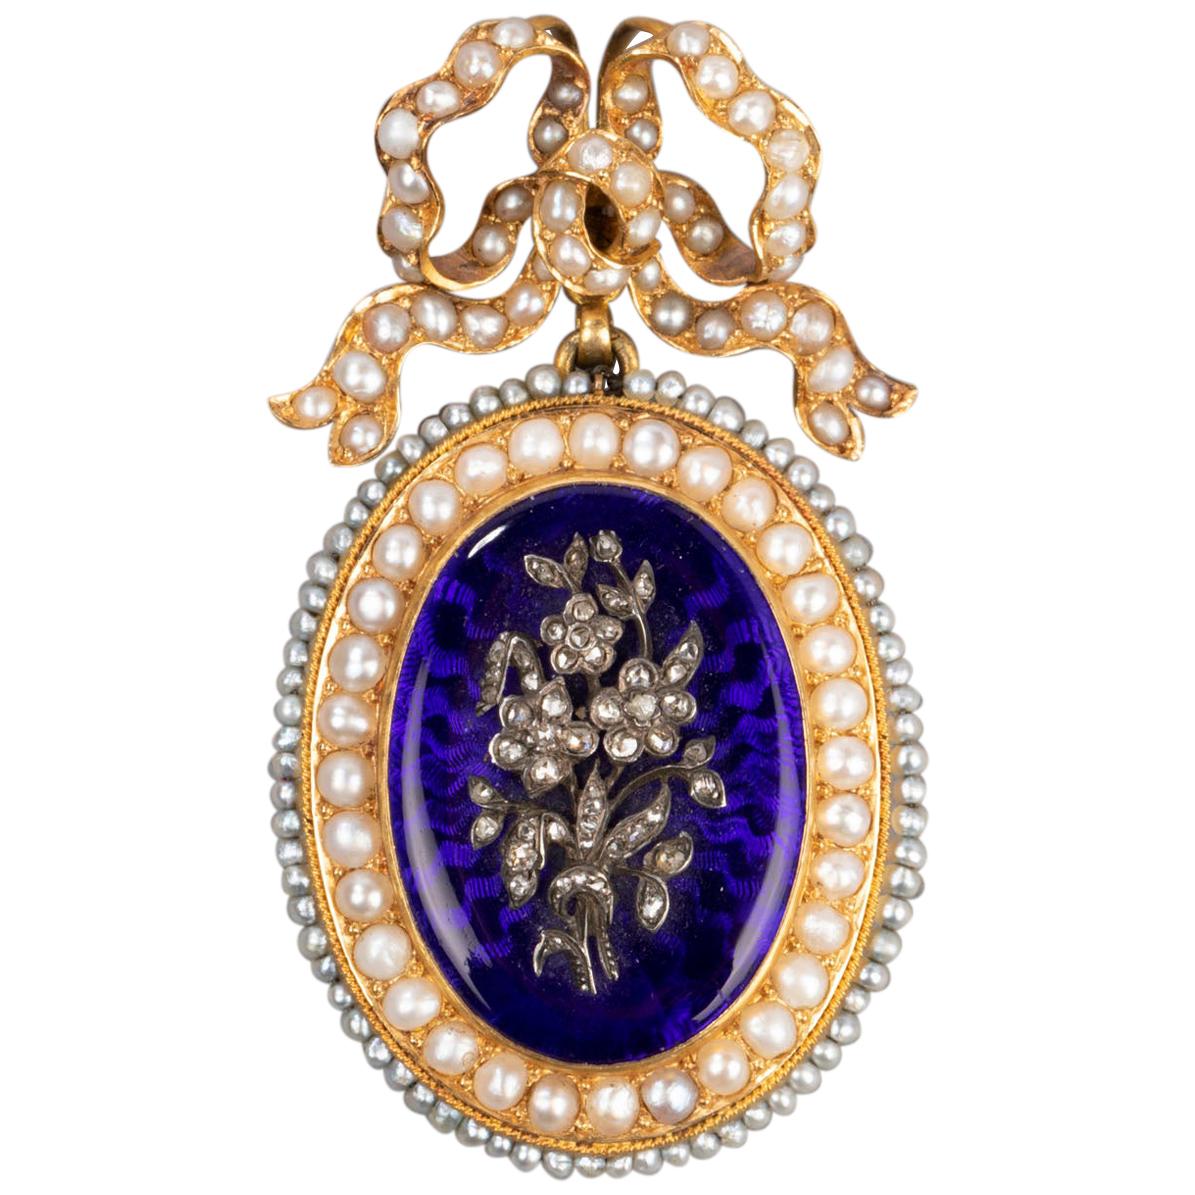 Antique Napoleon III Locket, Gold Enamel and Pearls